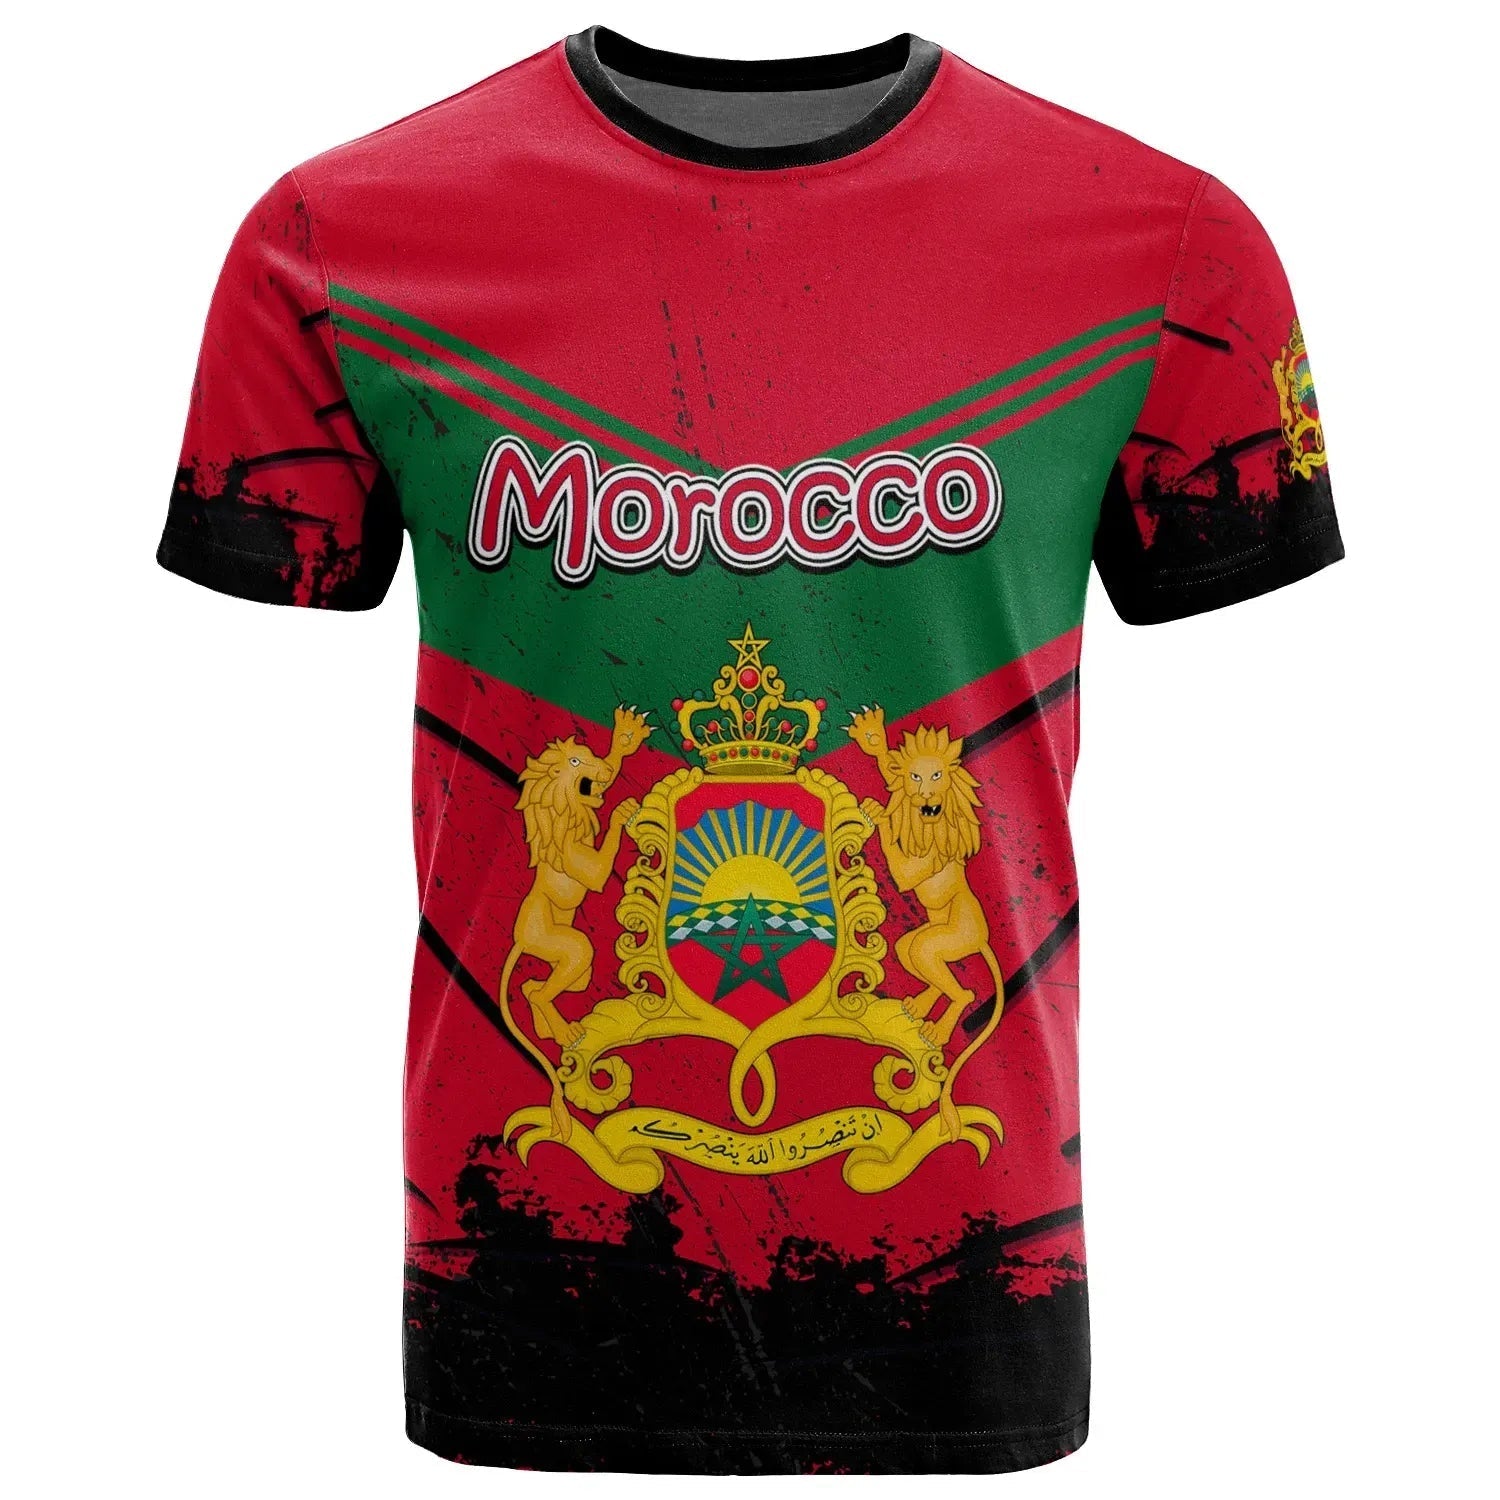 morocco-t-shirt-vintage-grunge-style